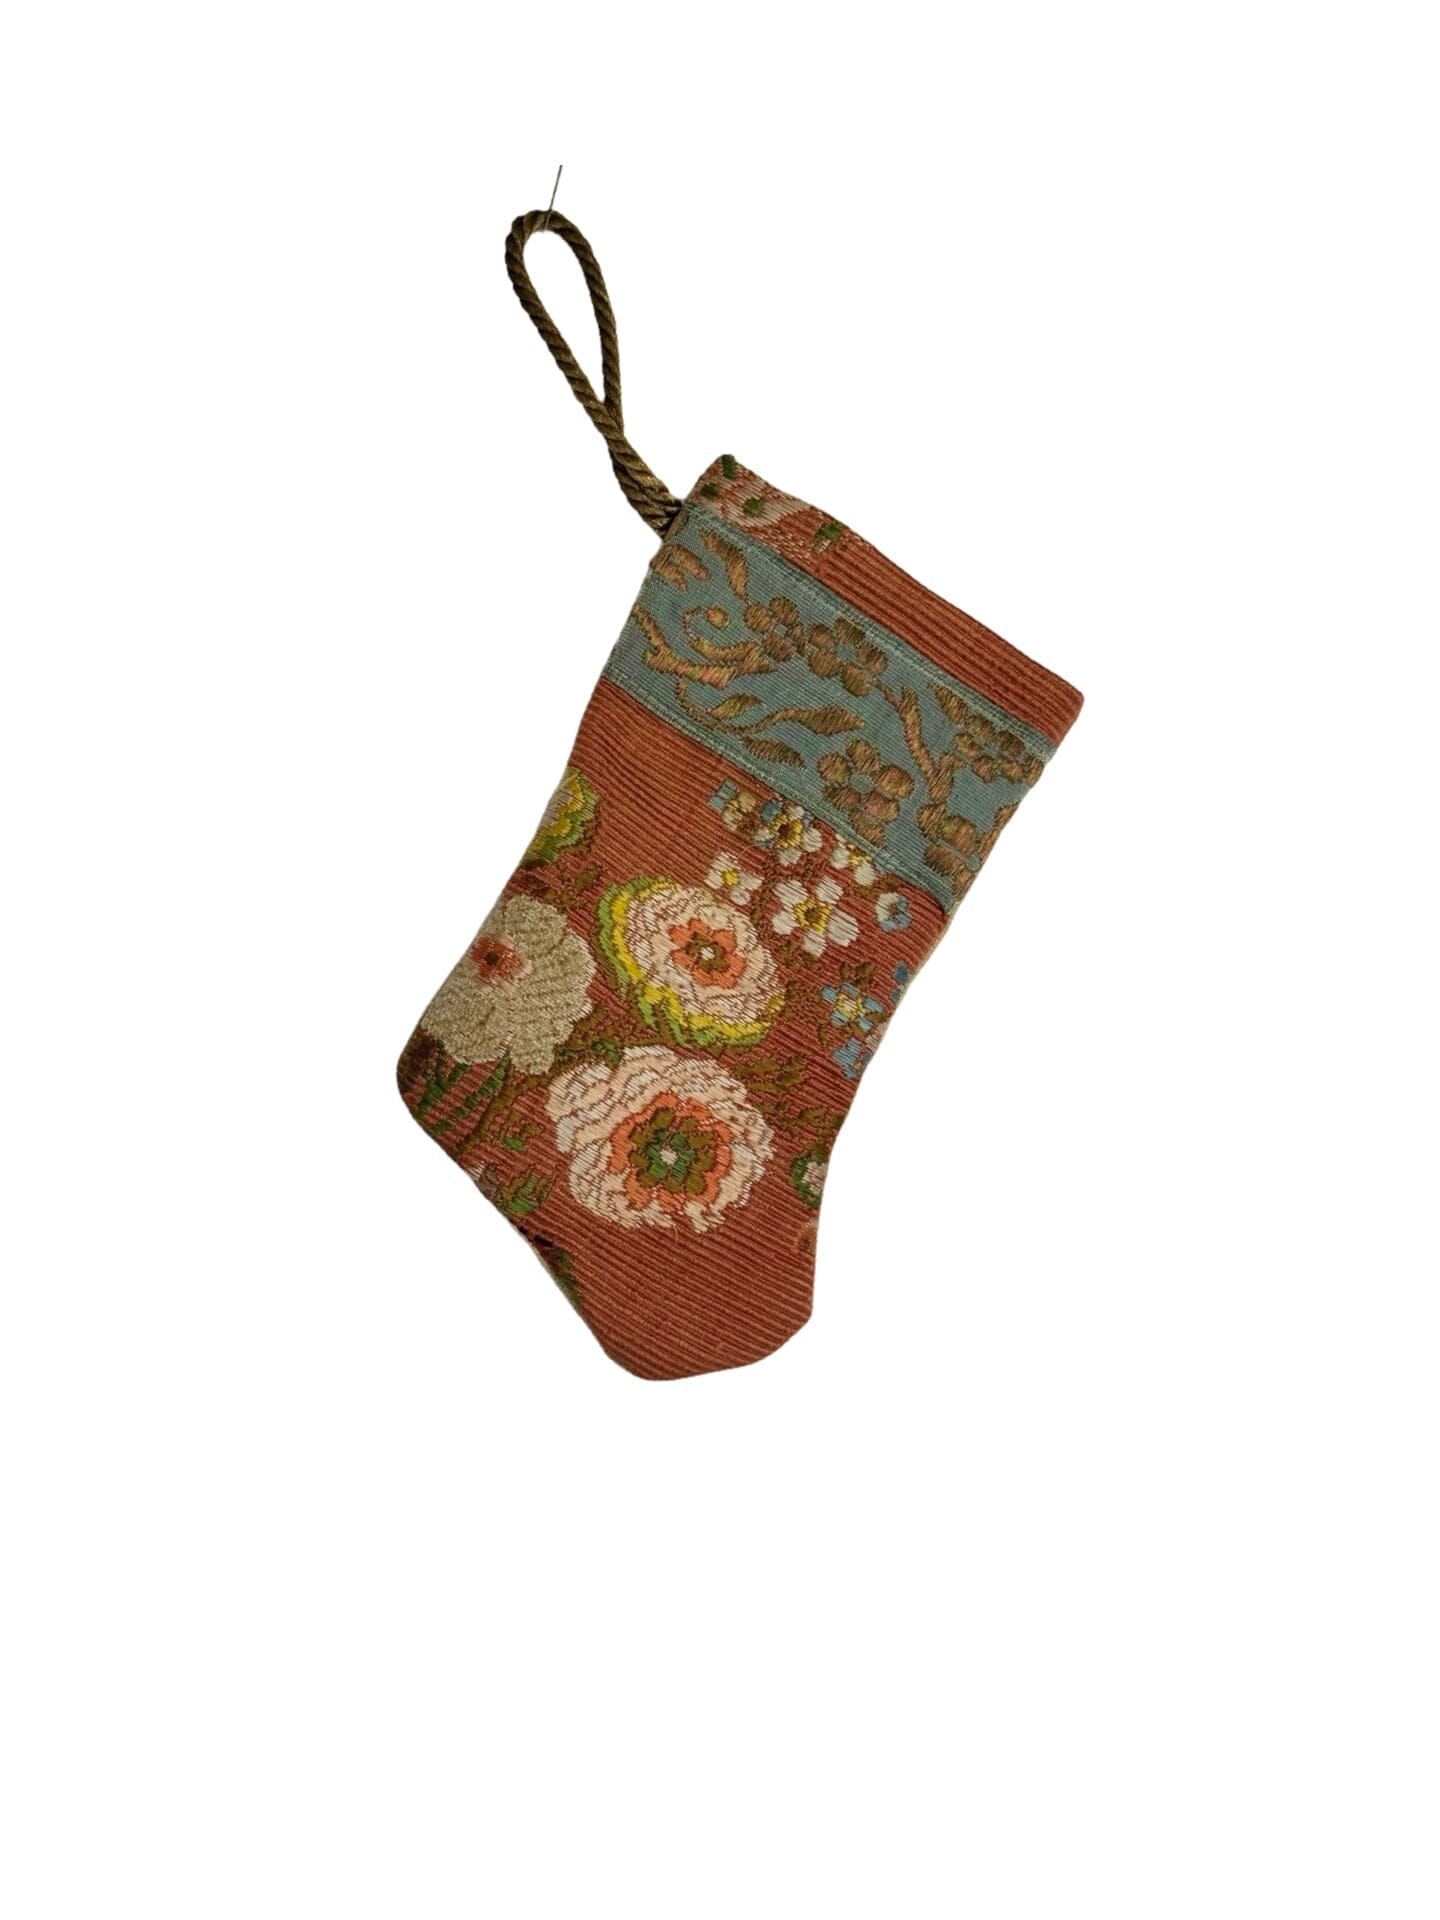 Handmade Mini Stocking Made From Vintage Fabric and Trims- Bronze Rose Floral Ornament B. Viz Design C 